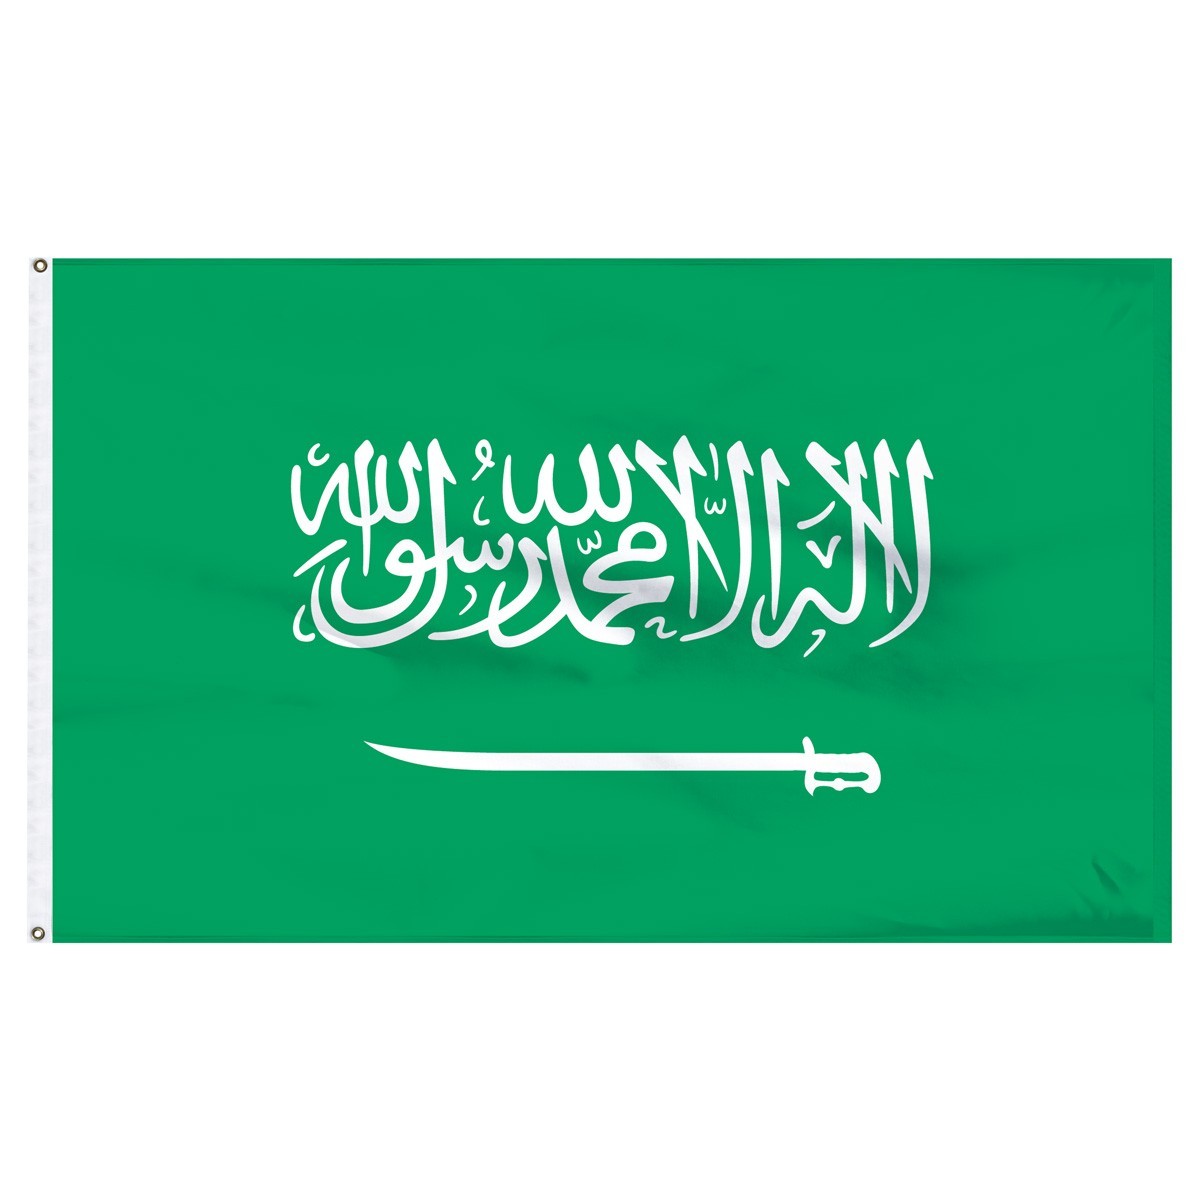 Bandera de nailon para exteriores de Arabia Saudita de 5 pies x 8 pies